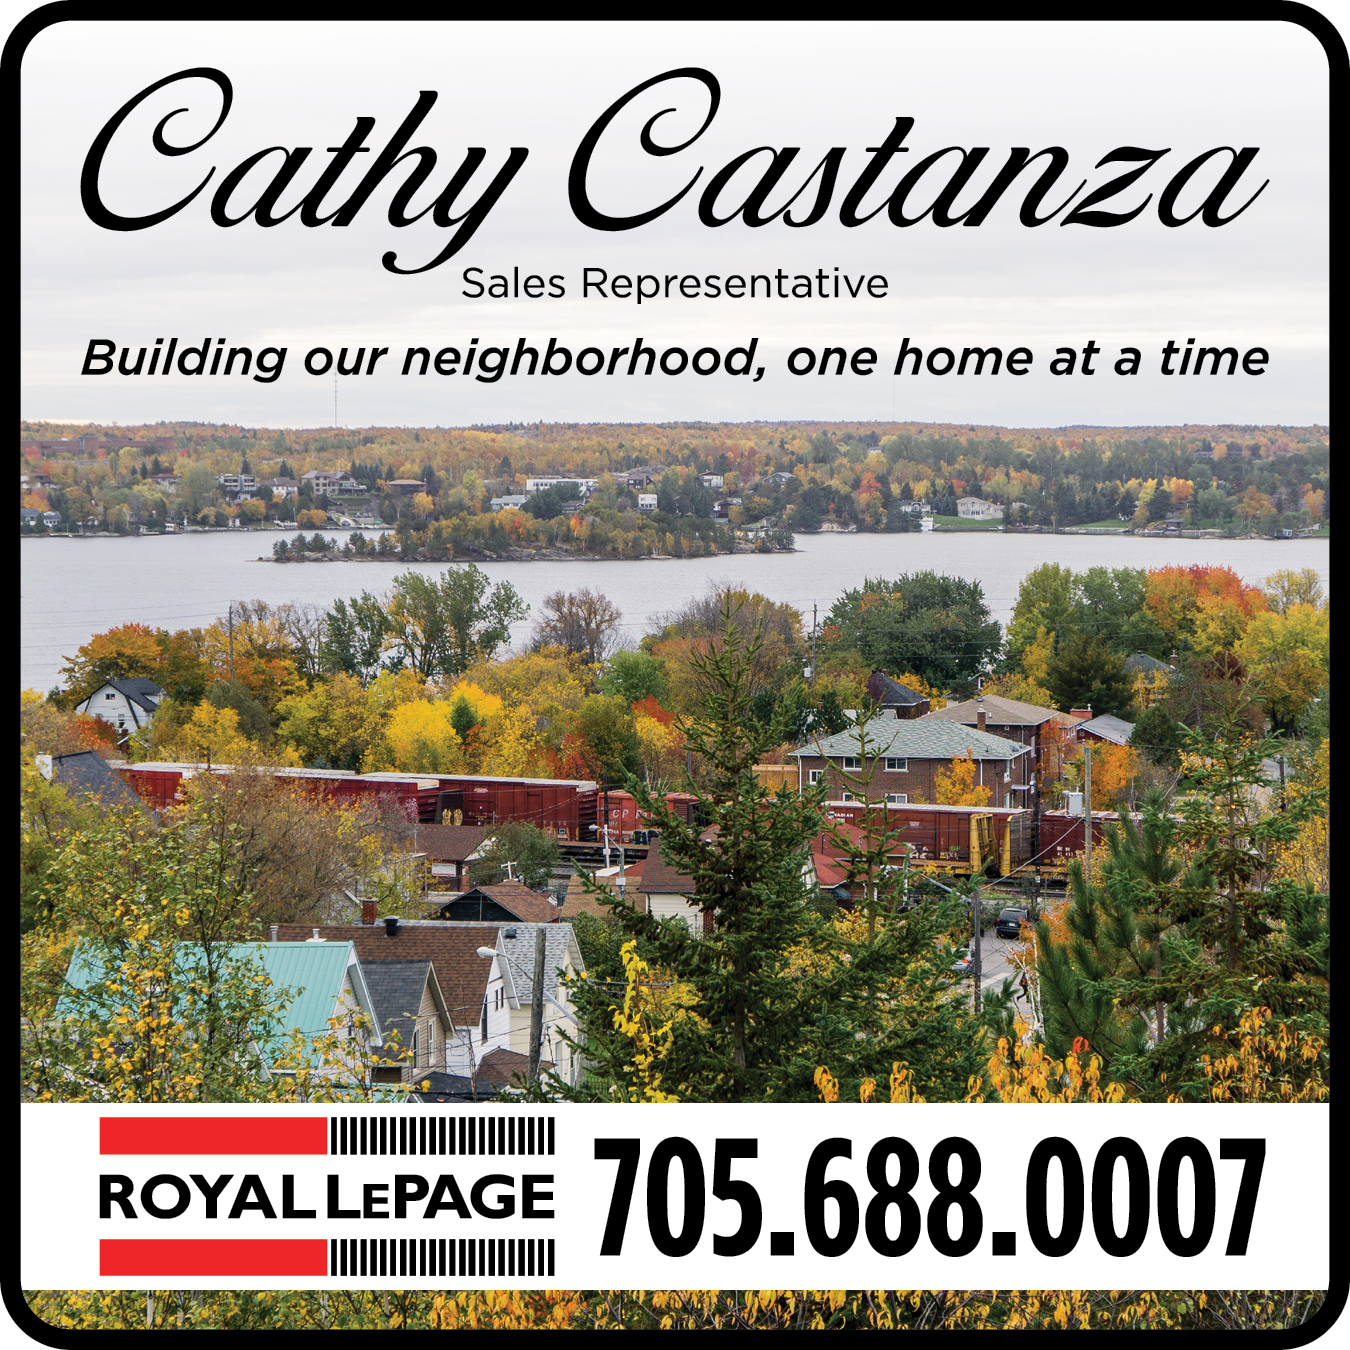 Cathy Castanza - Royal Lepage